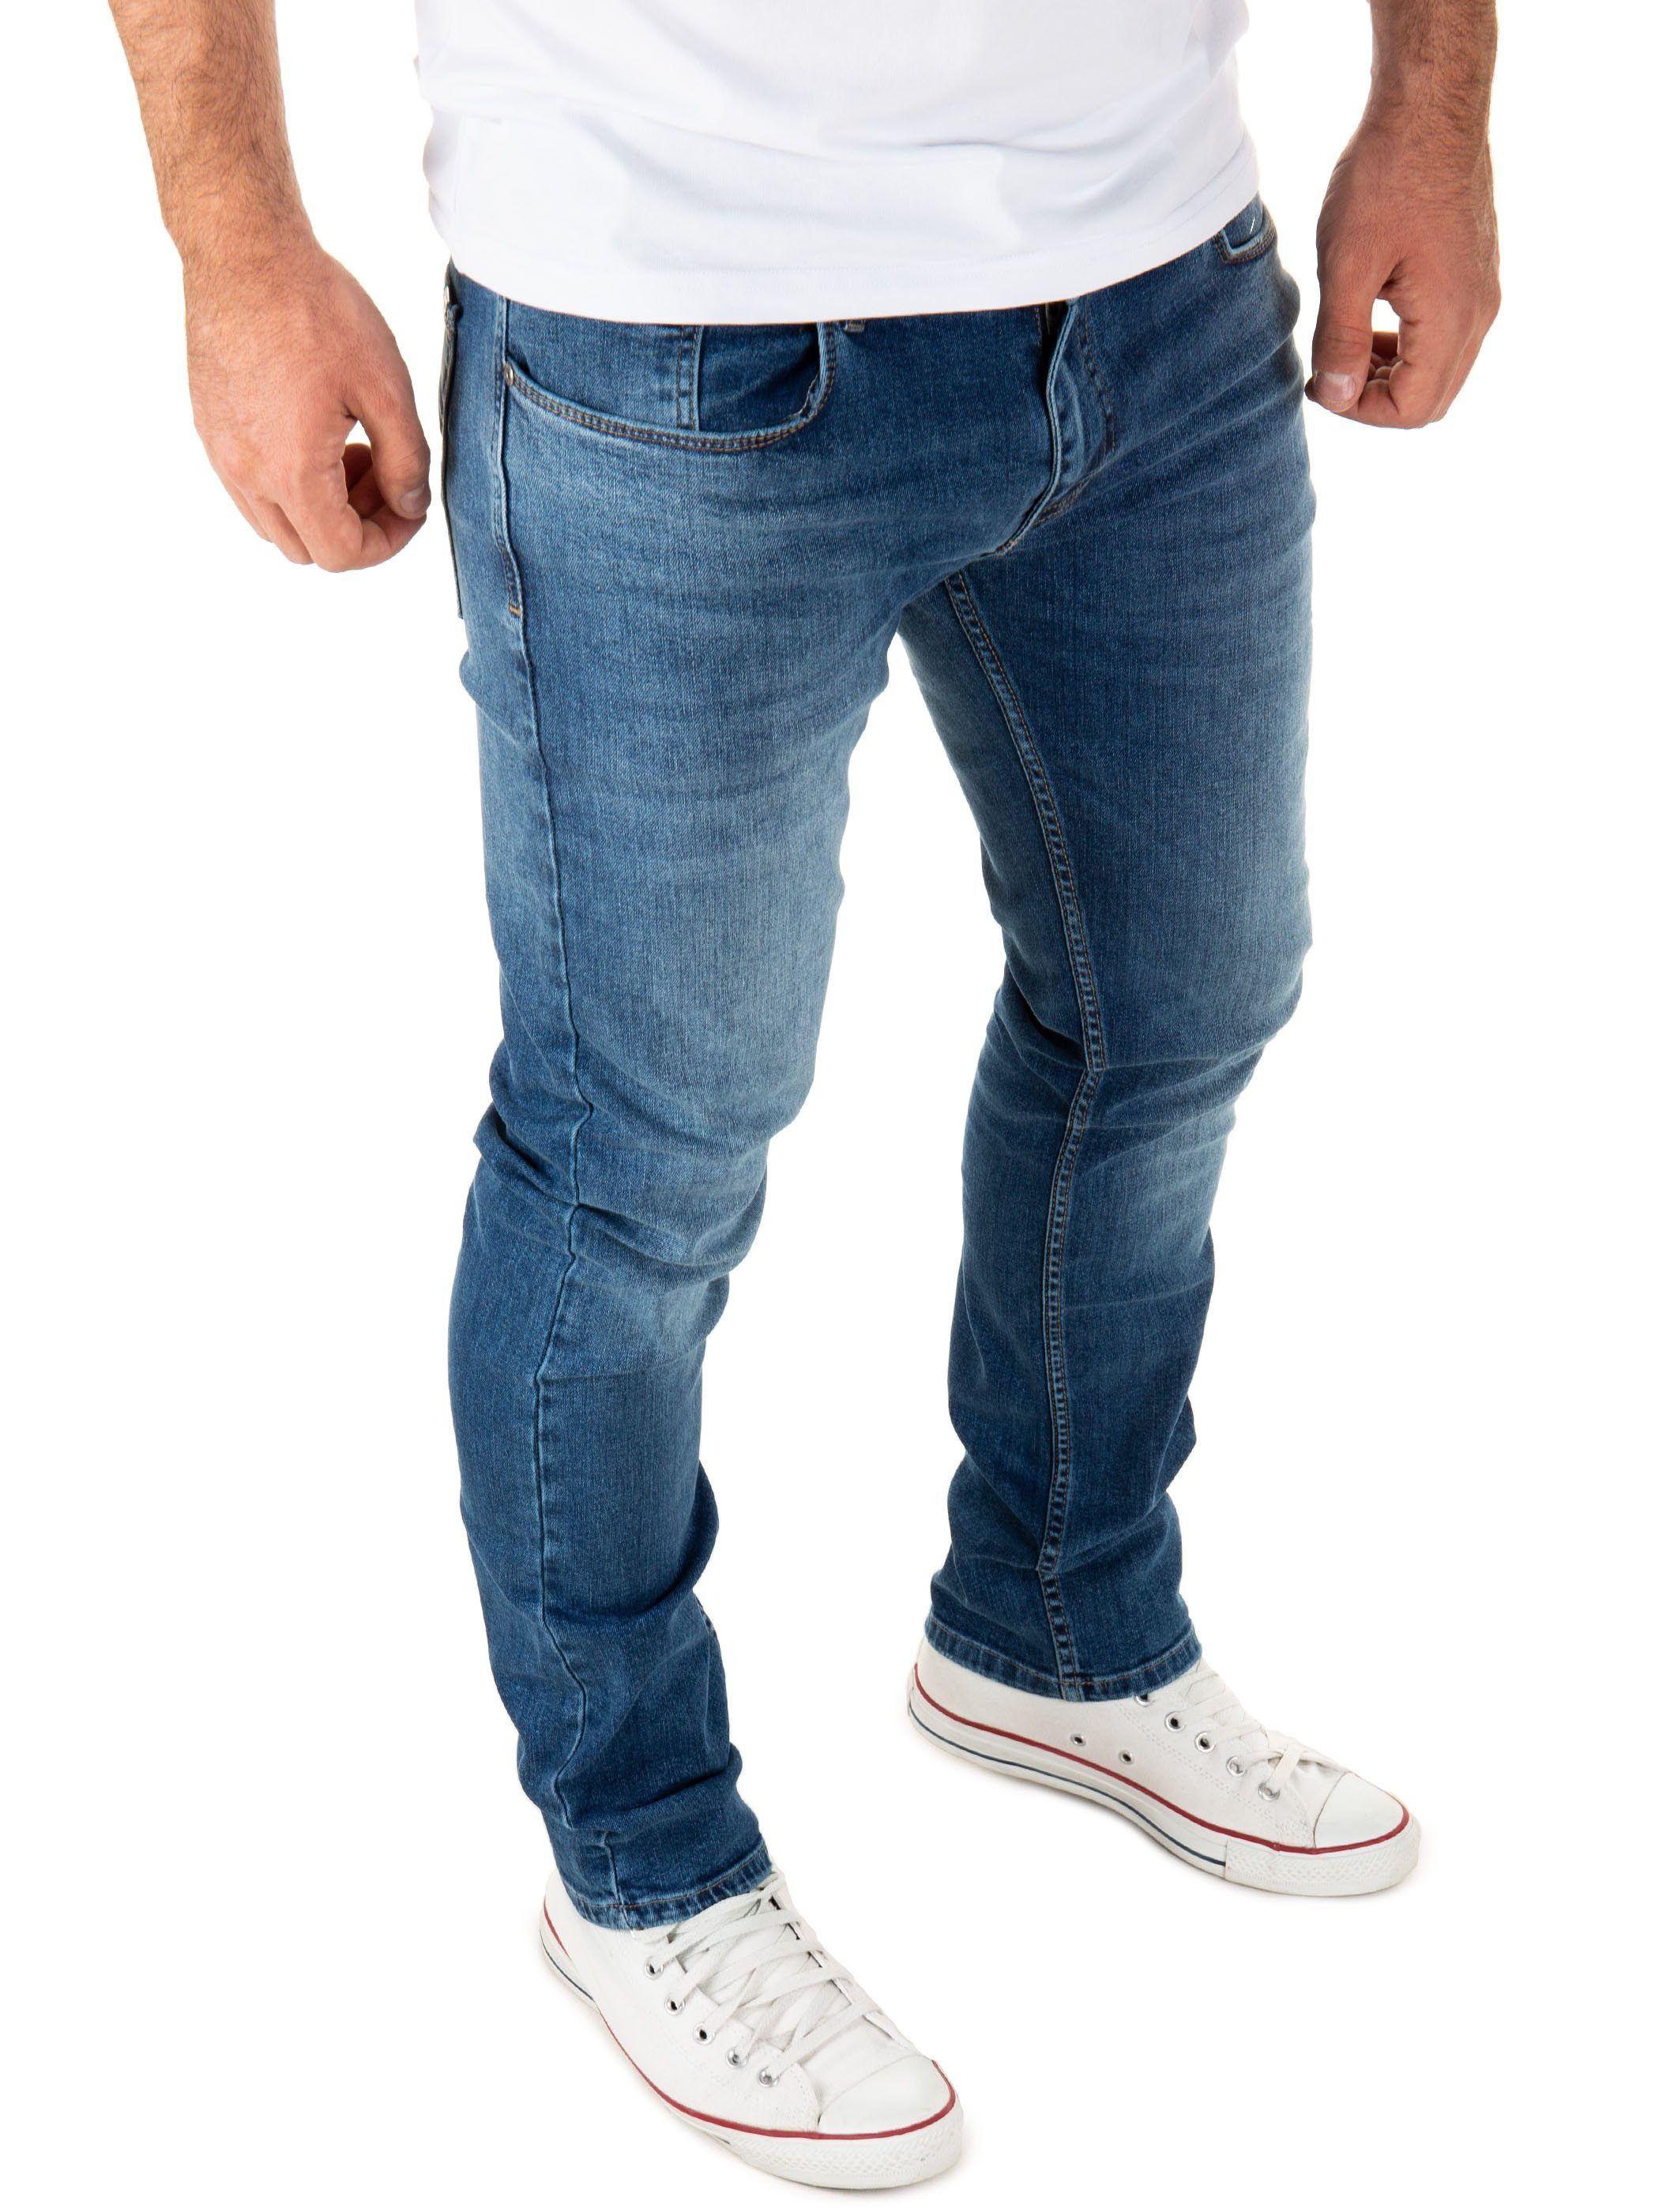 WOTEGA Slim-fit-Jeans Stretch Jeanshose Justin Herren Jeans mit Stretchanteil Blau (Blue Indigo 193928)